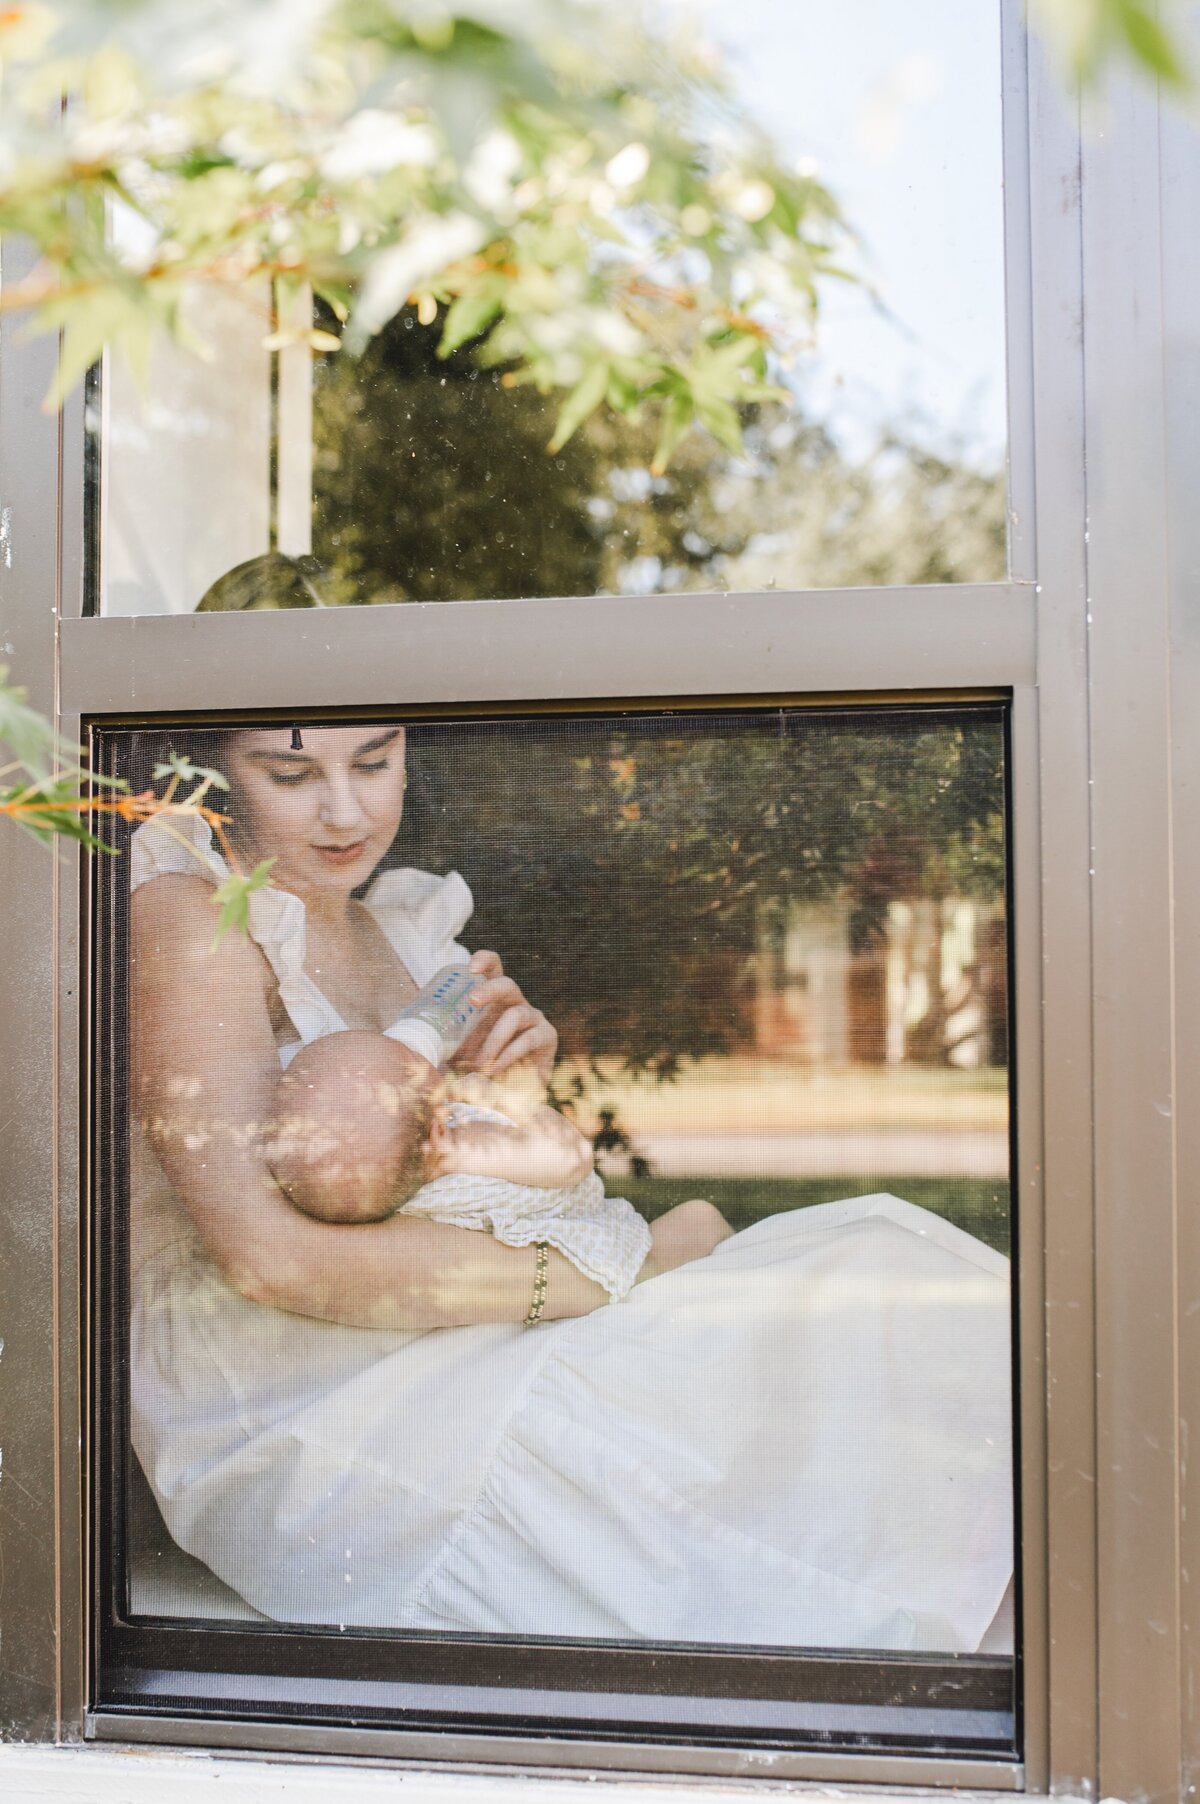 peeking inside a window at mom feeding baby